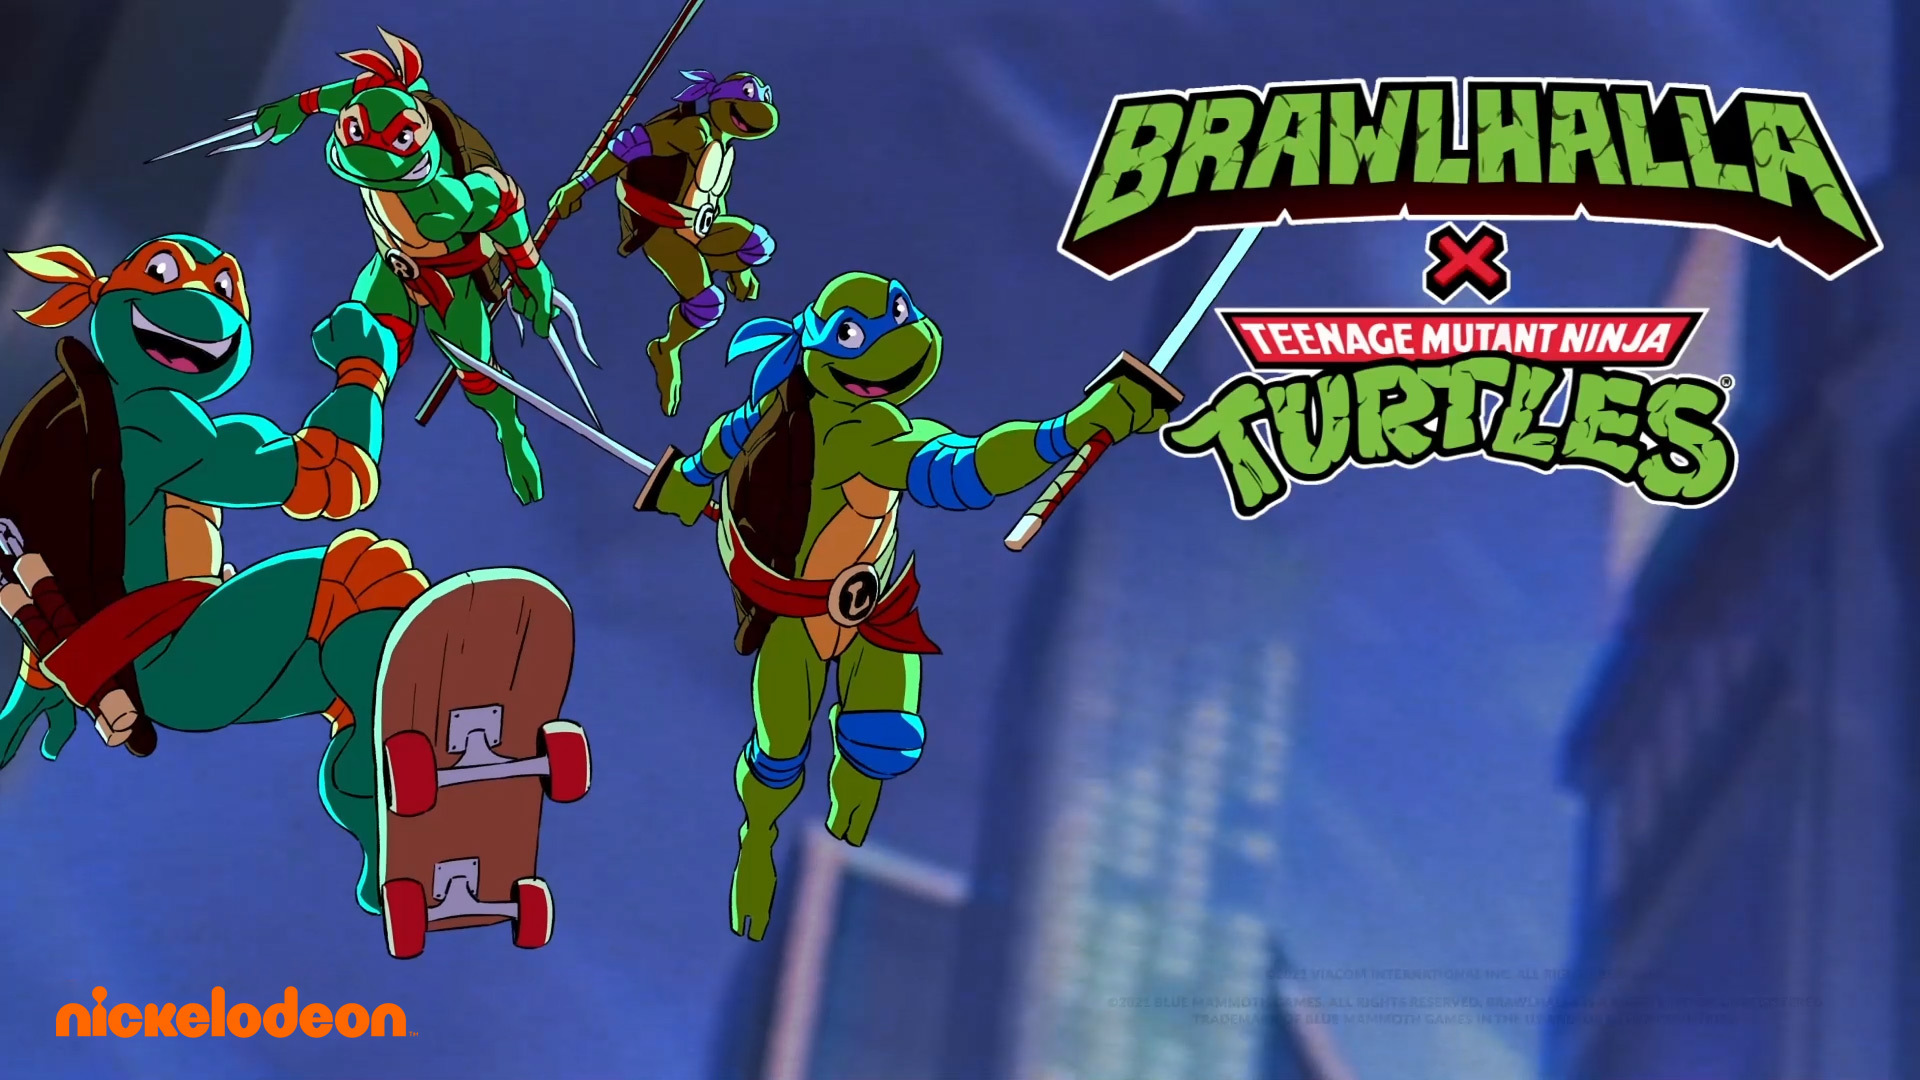 Brawlhalla X Teenage Mutant Ninja Turtles coming June 16!